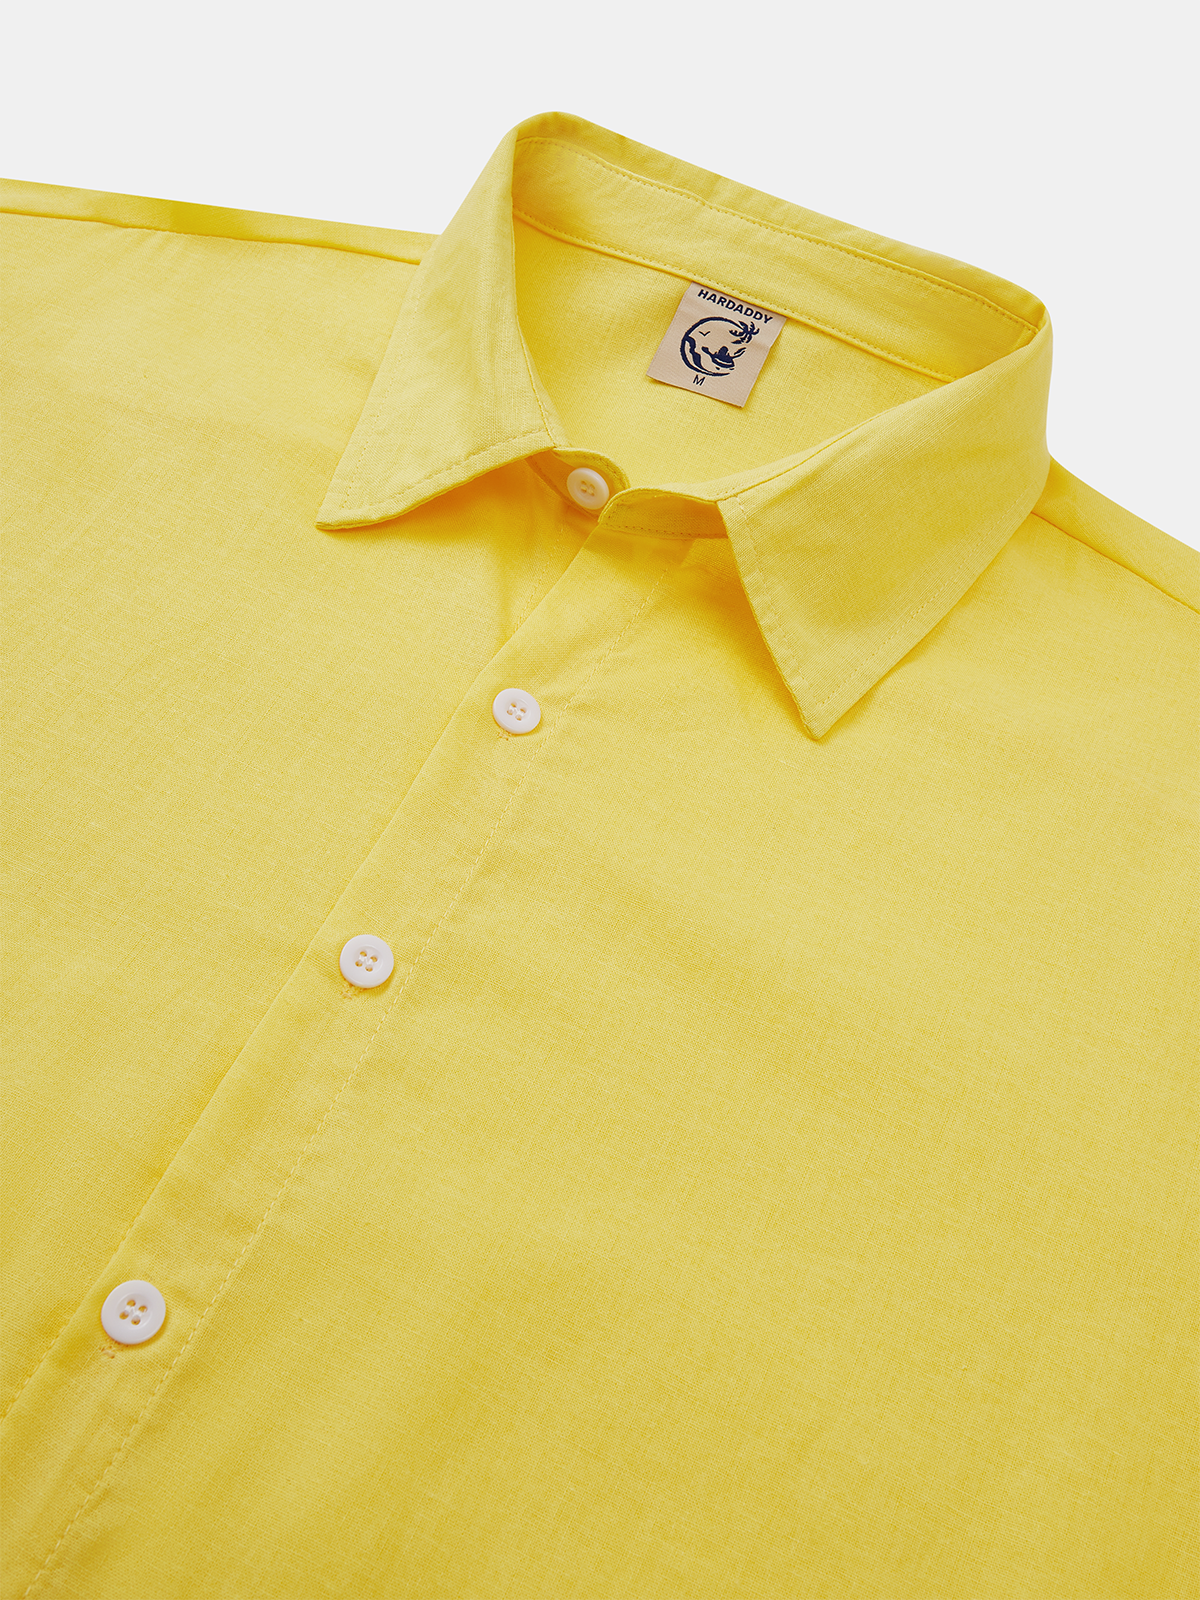 Hardaddy Cotton Plain Long Sleeve Casual Shirt